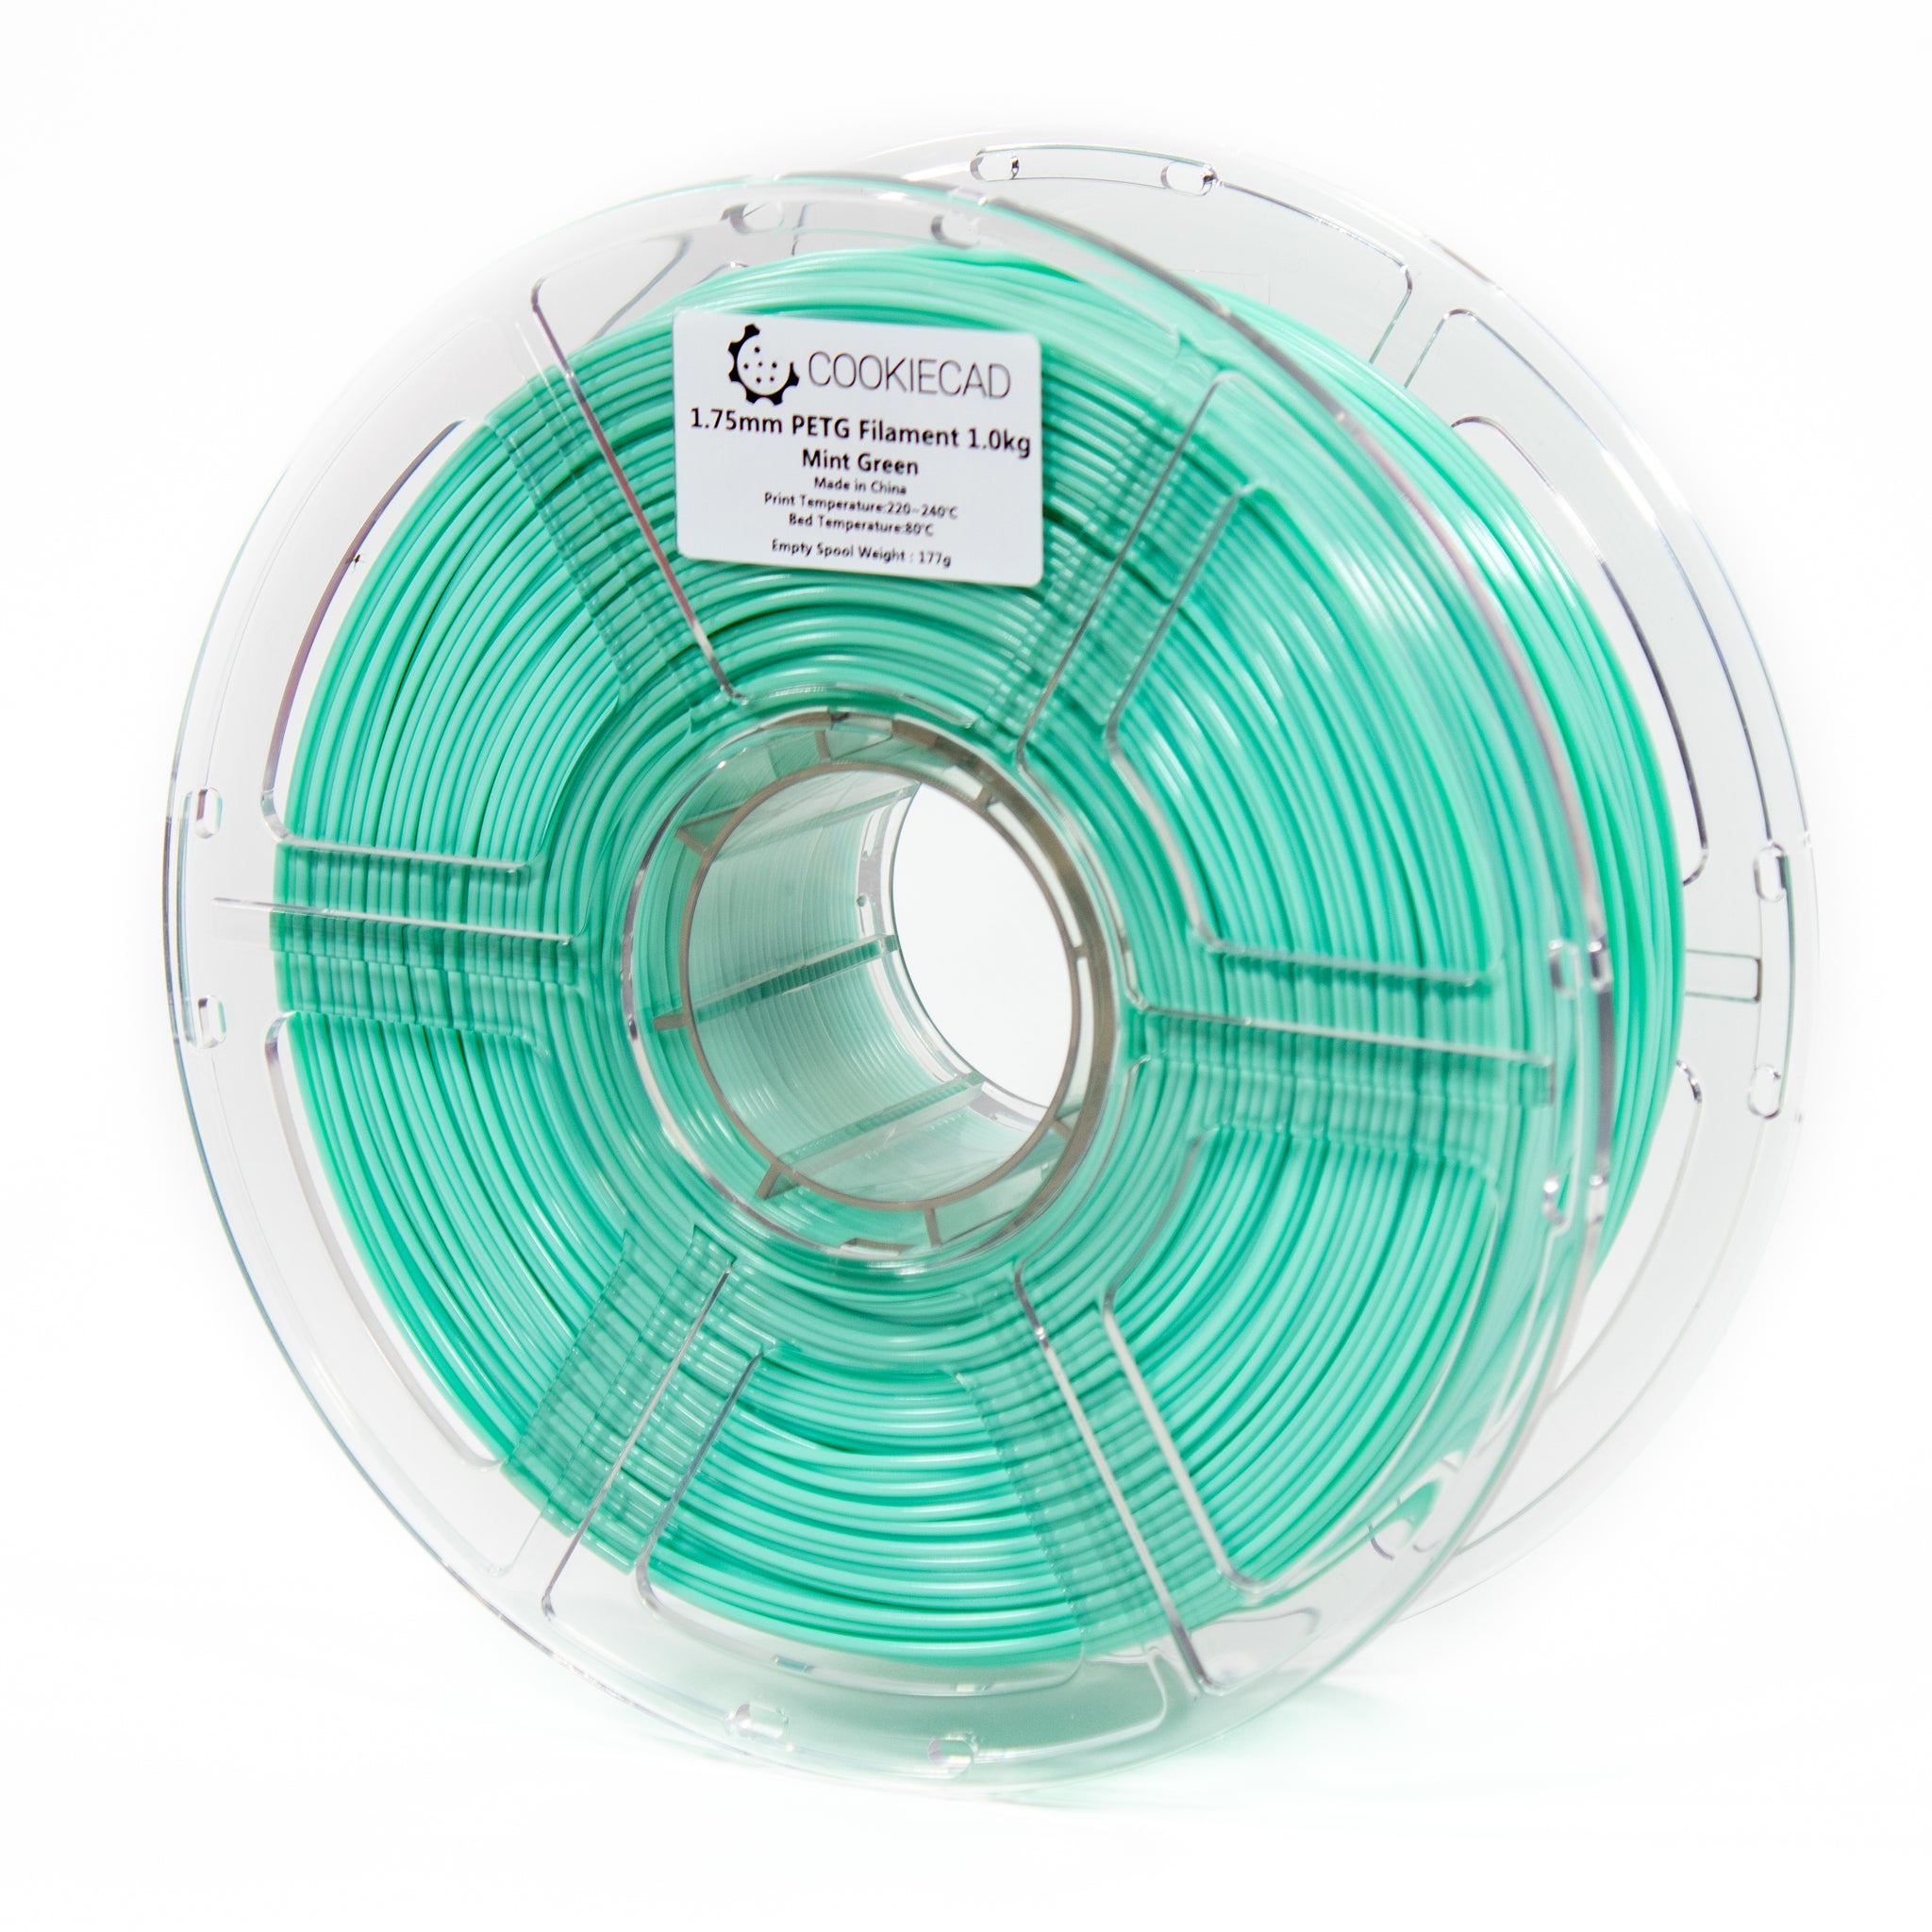 PETG Mint Green PETG Filament 1.75mm, 1kg – Cookiecad